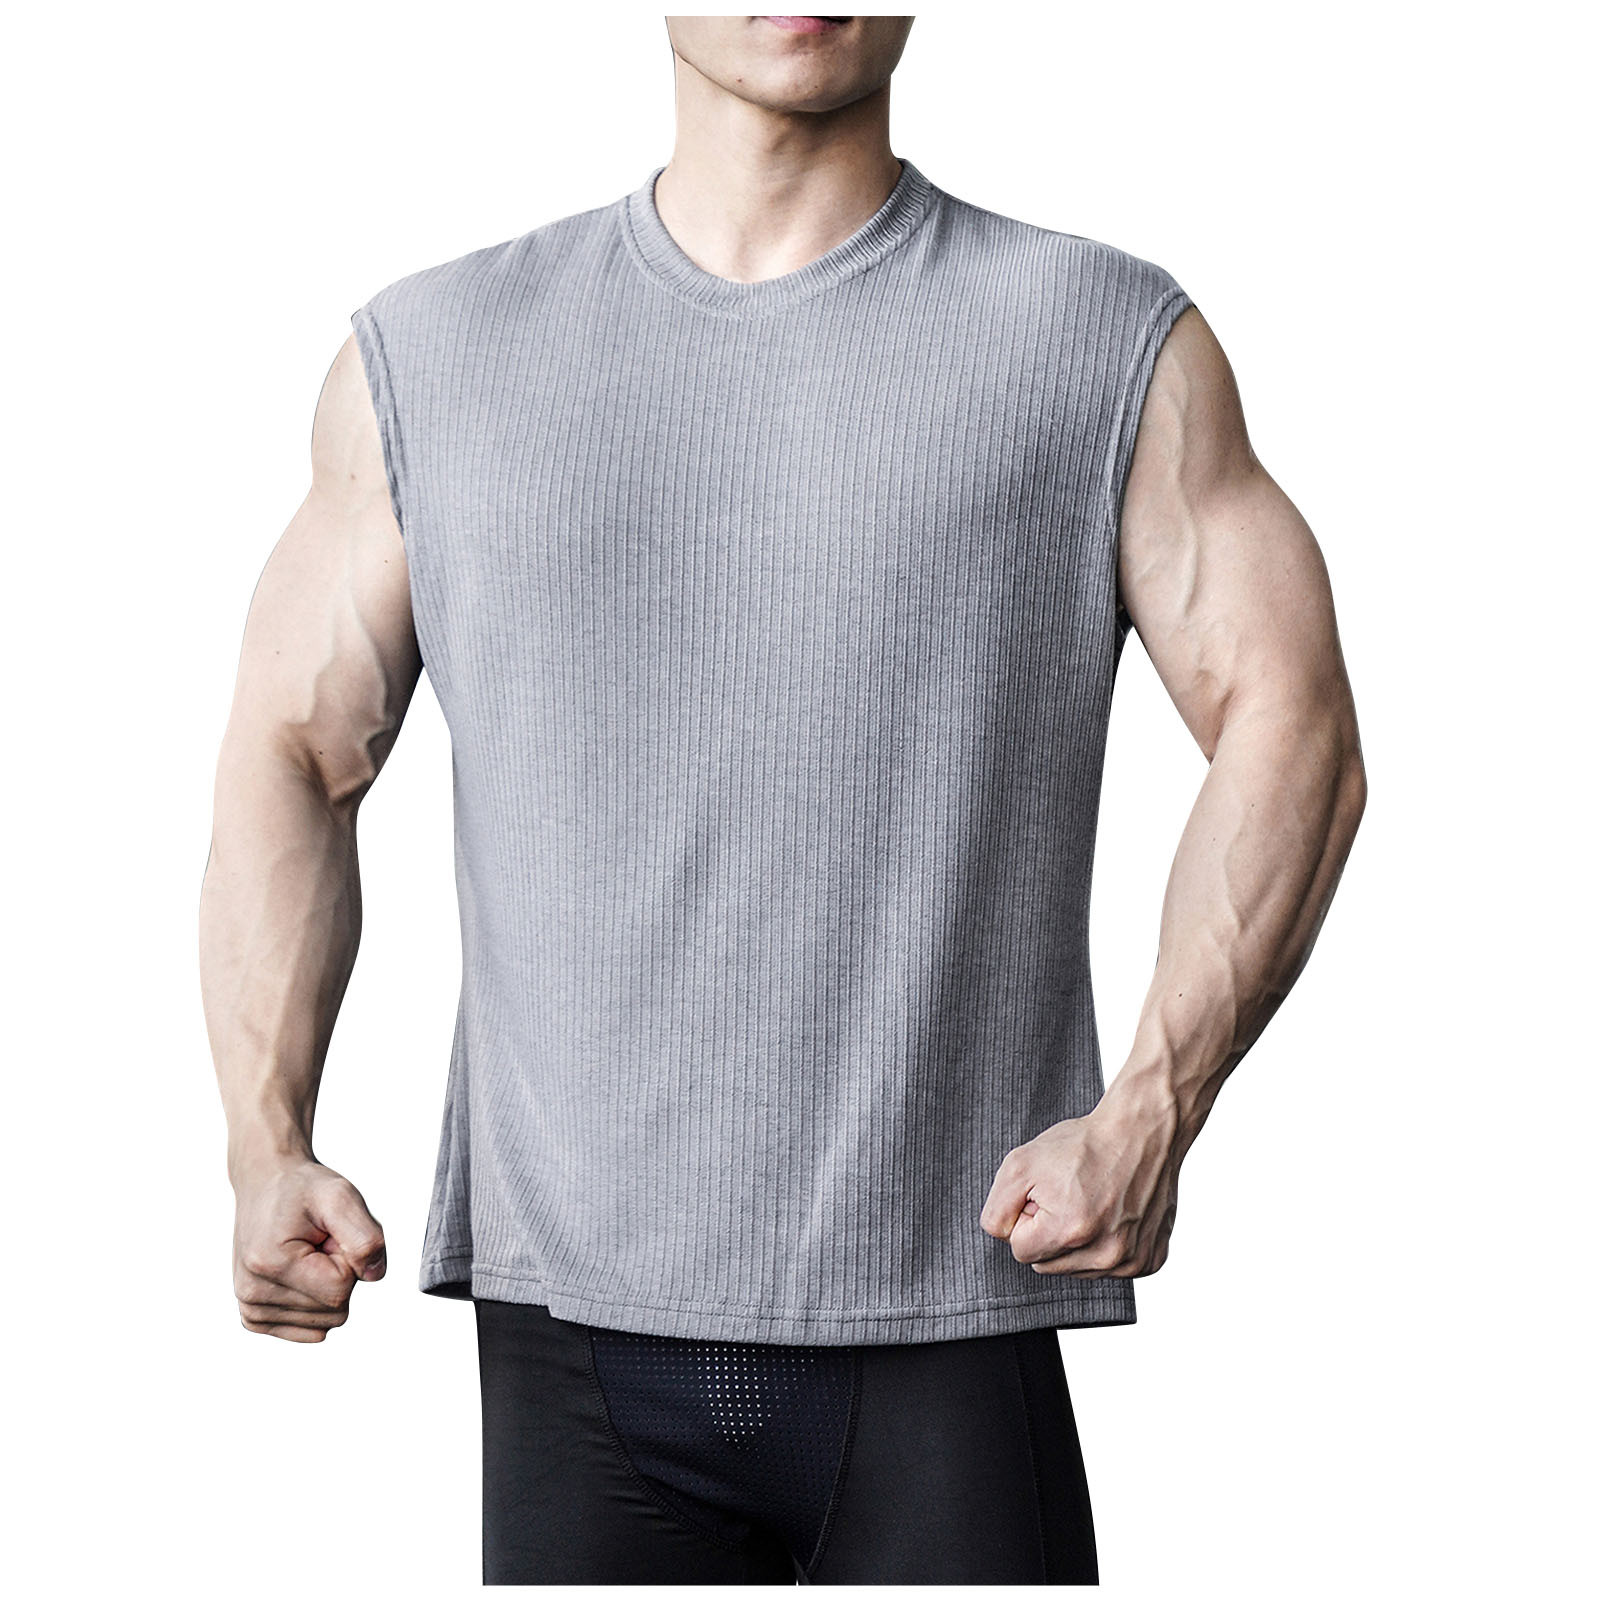 OGLCCG Men's Ribbed Knit Workout Tank Tops Sleeveless Gym Shirts ...